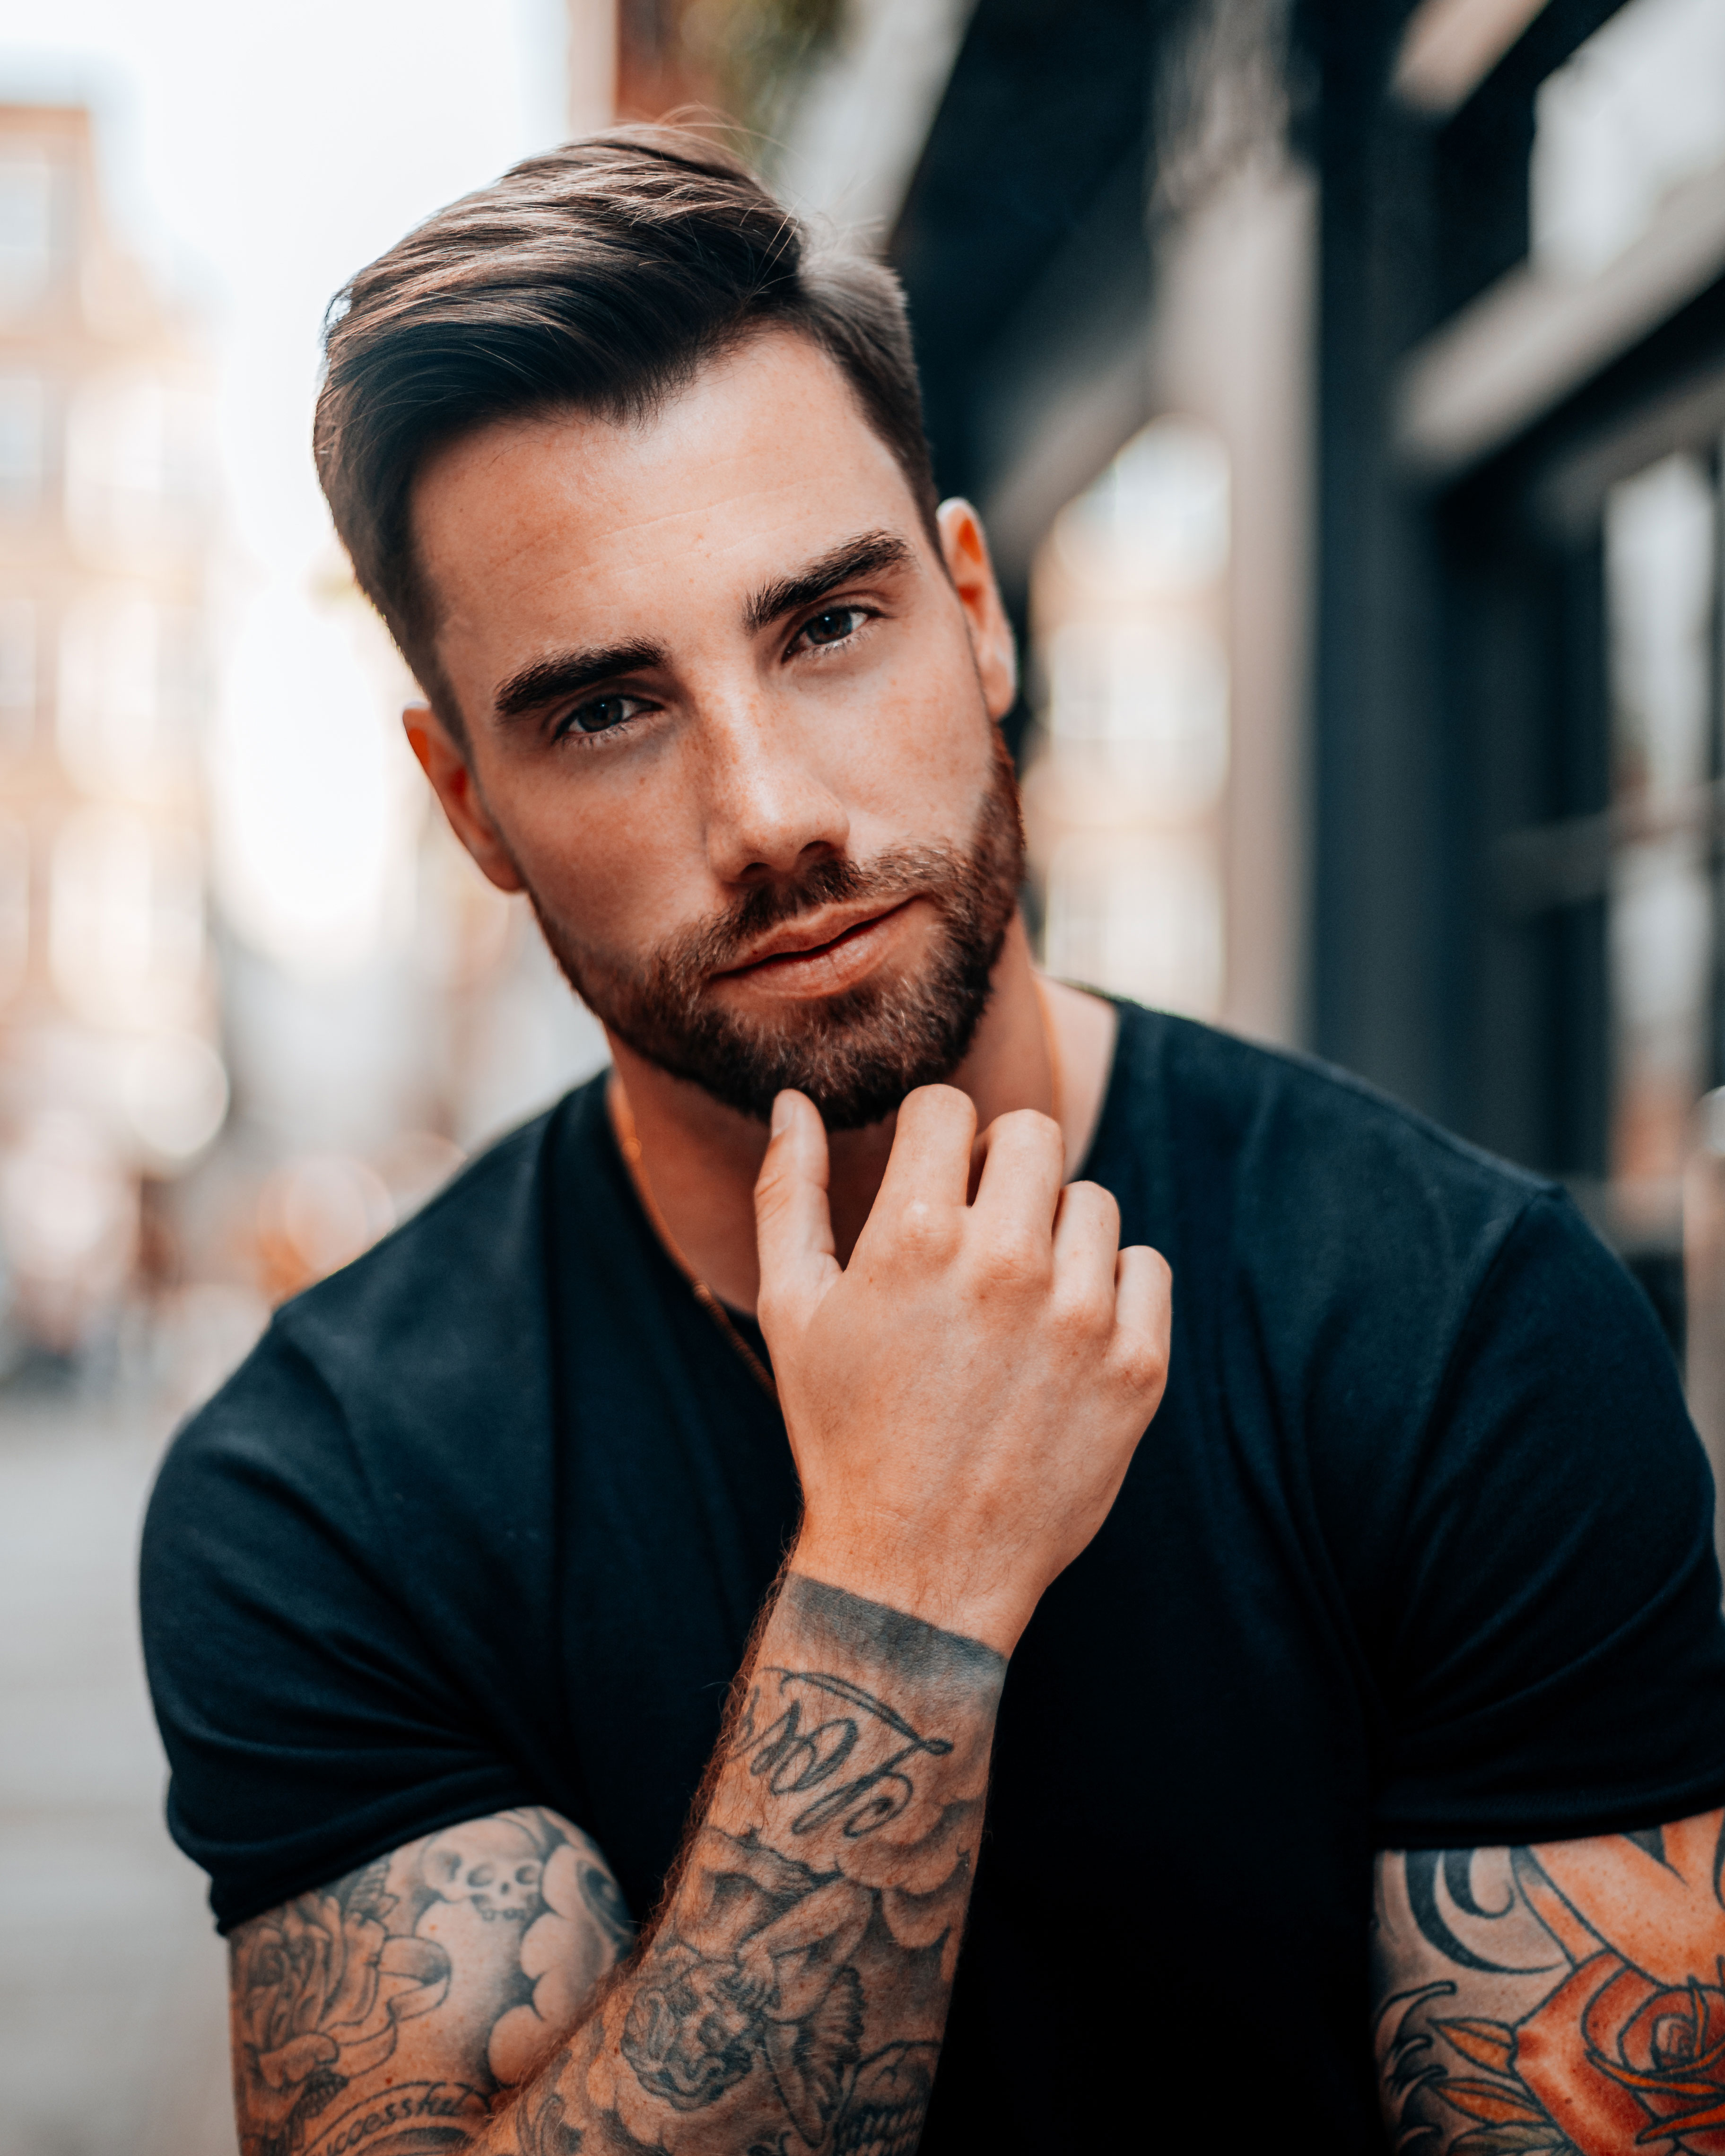 Short Beard Styles: How To Grow and Trim a Short Beard - Wahl UK